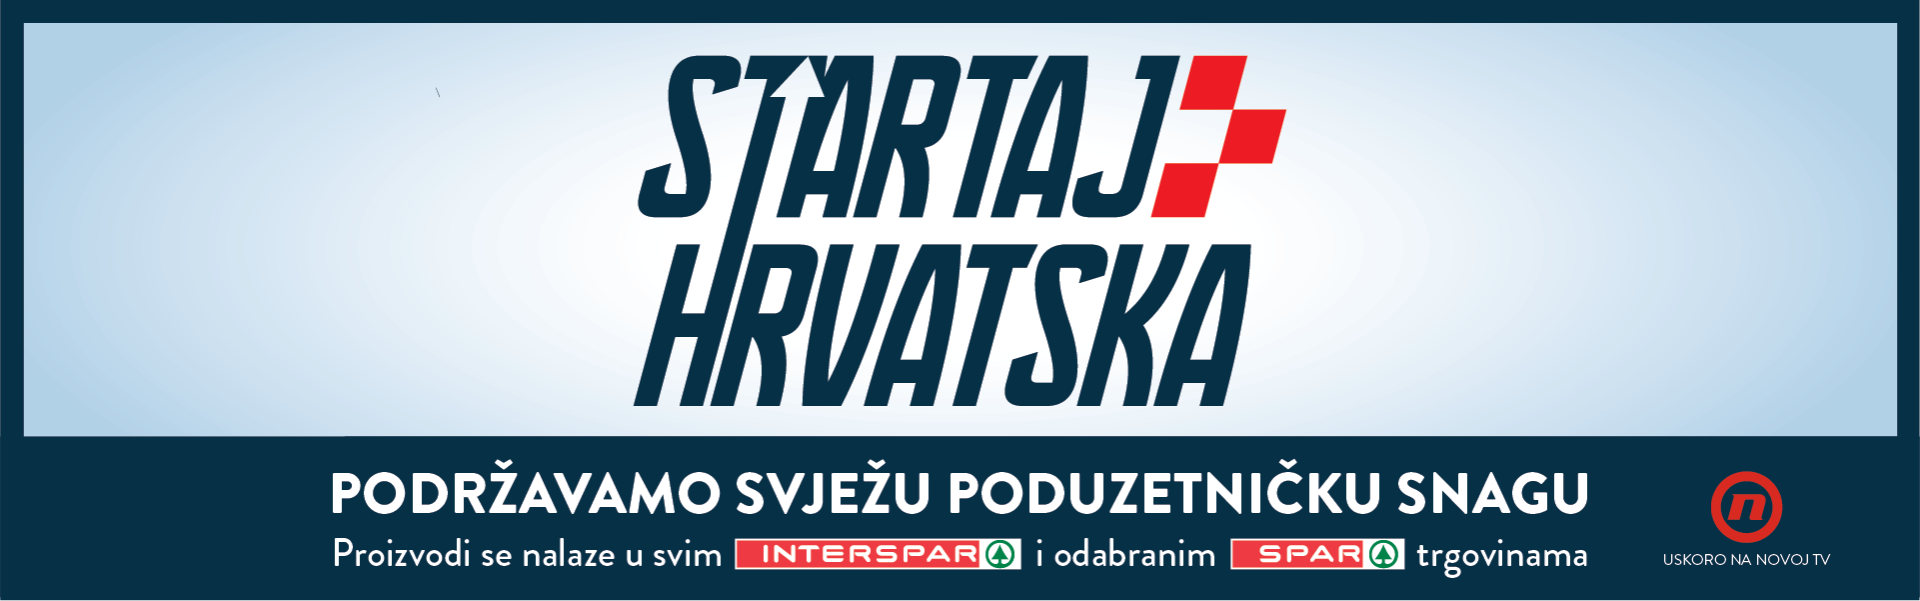 Startaj Hrvatska druga sezona (2021.)